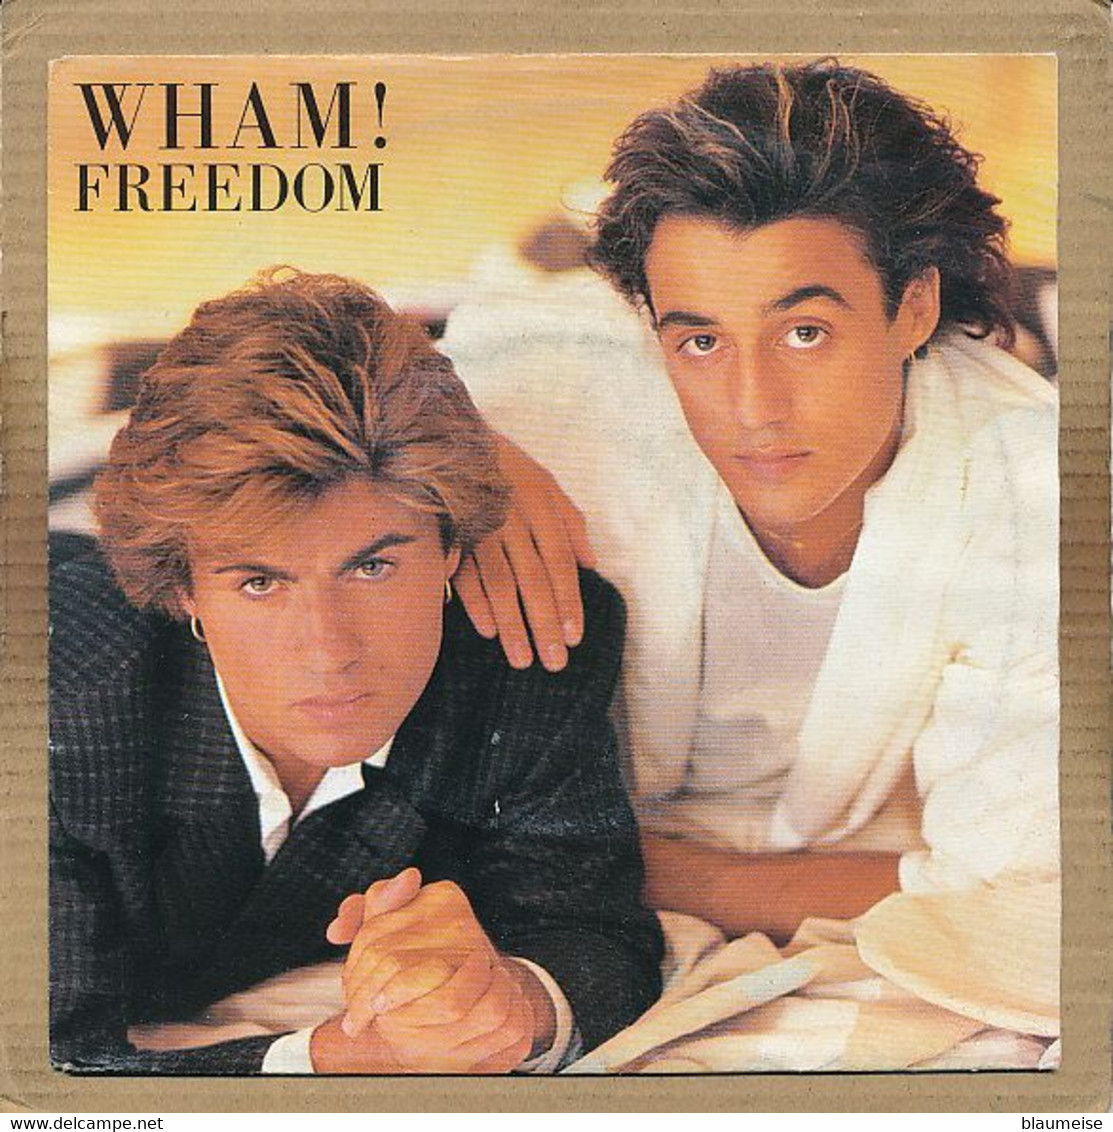 7" Single, Wham - Freedom - Disco, Pop